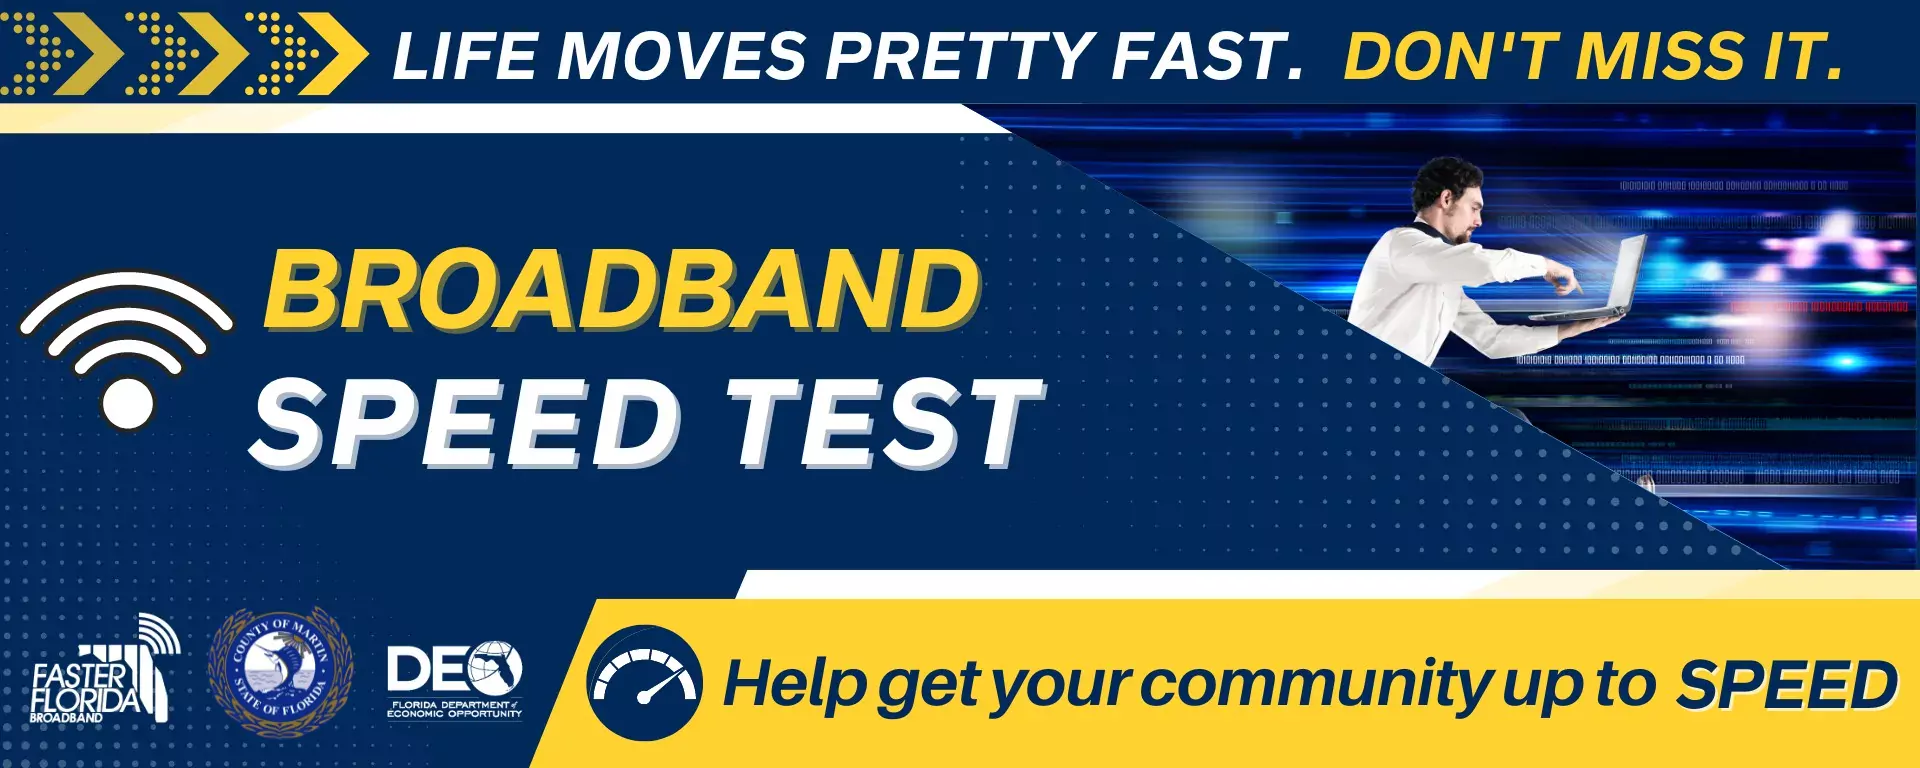 Faster Florida Broadband Speed Test